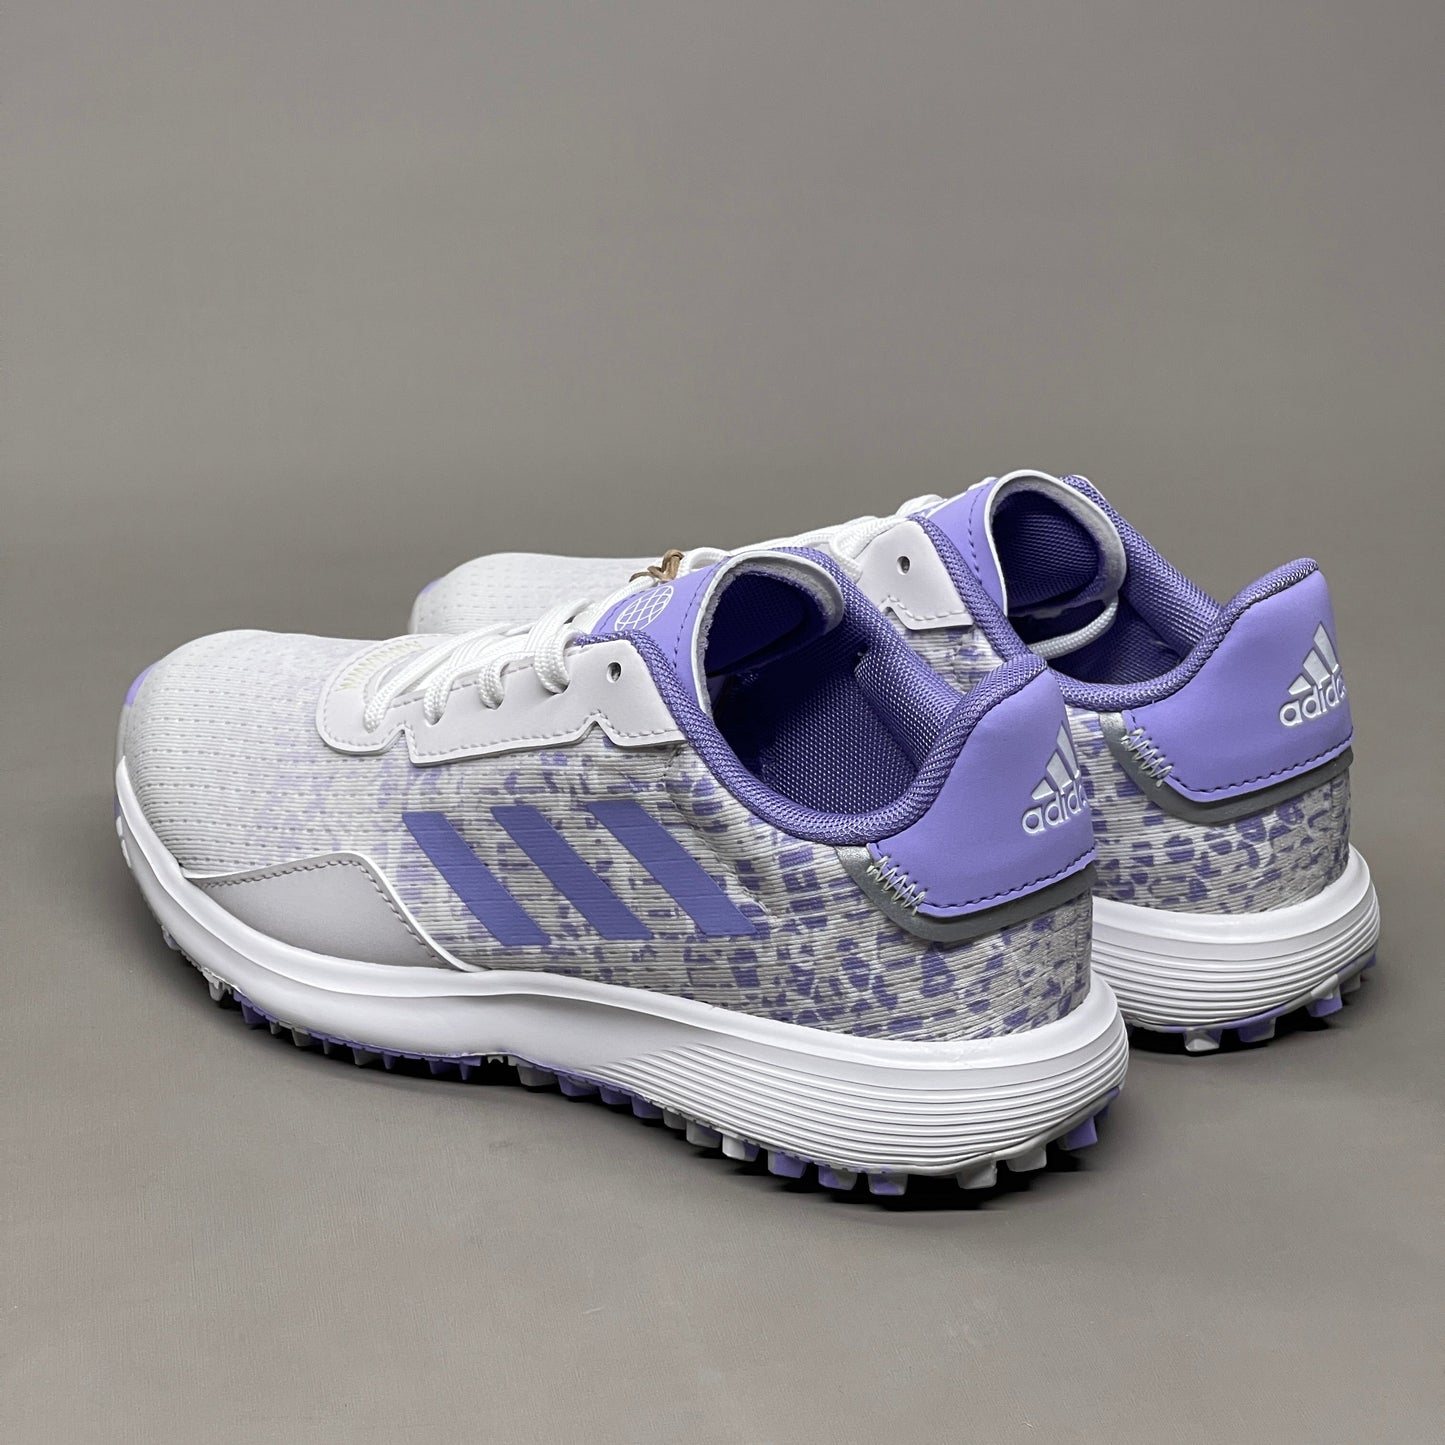 ADIDAS Golf Shoes JR S2G SL Waterproof Youth Sz 6.5 White / Lime / Purple GV9787 (New)